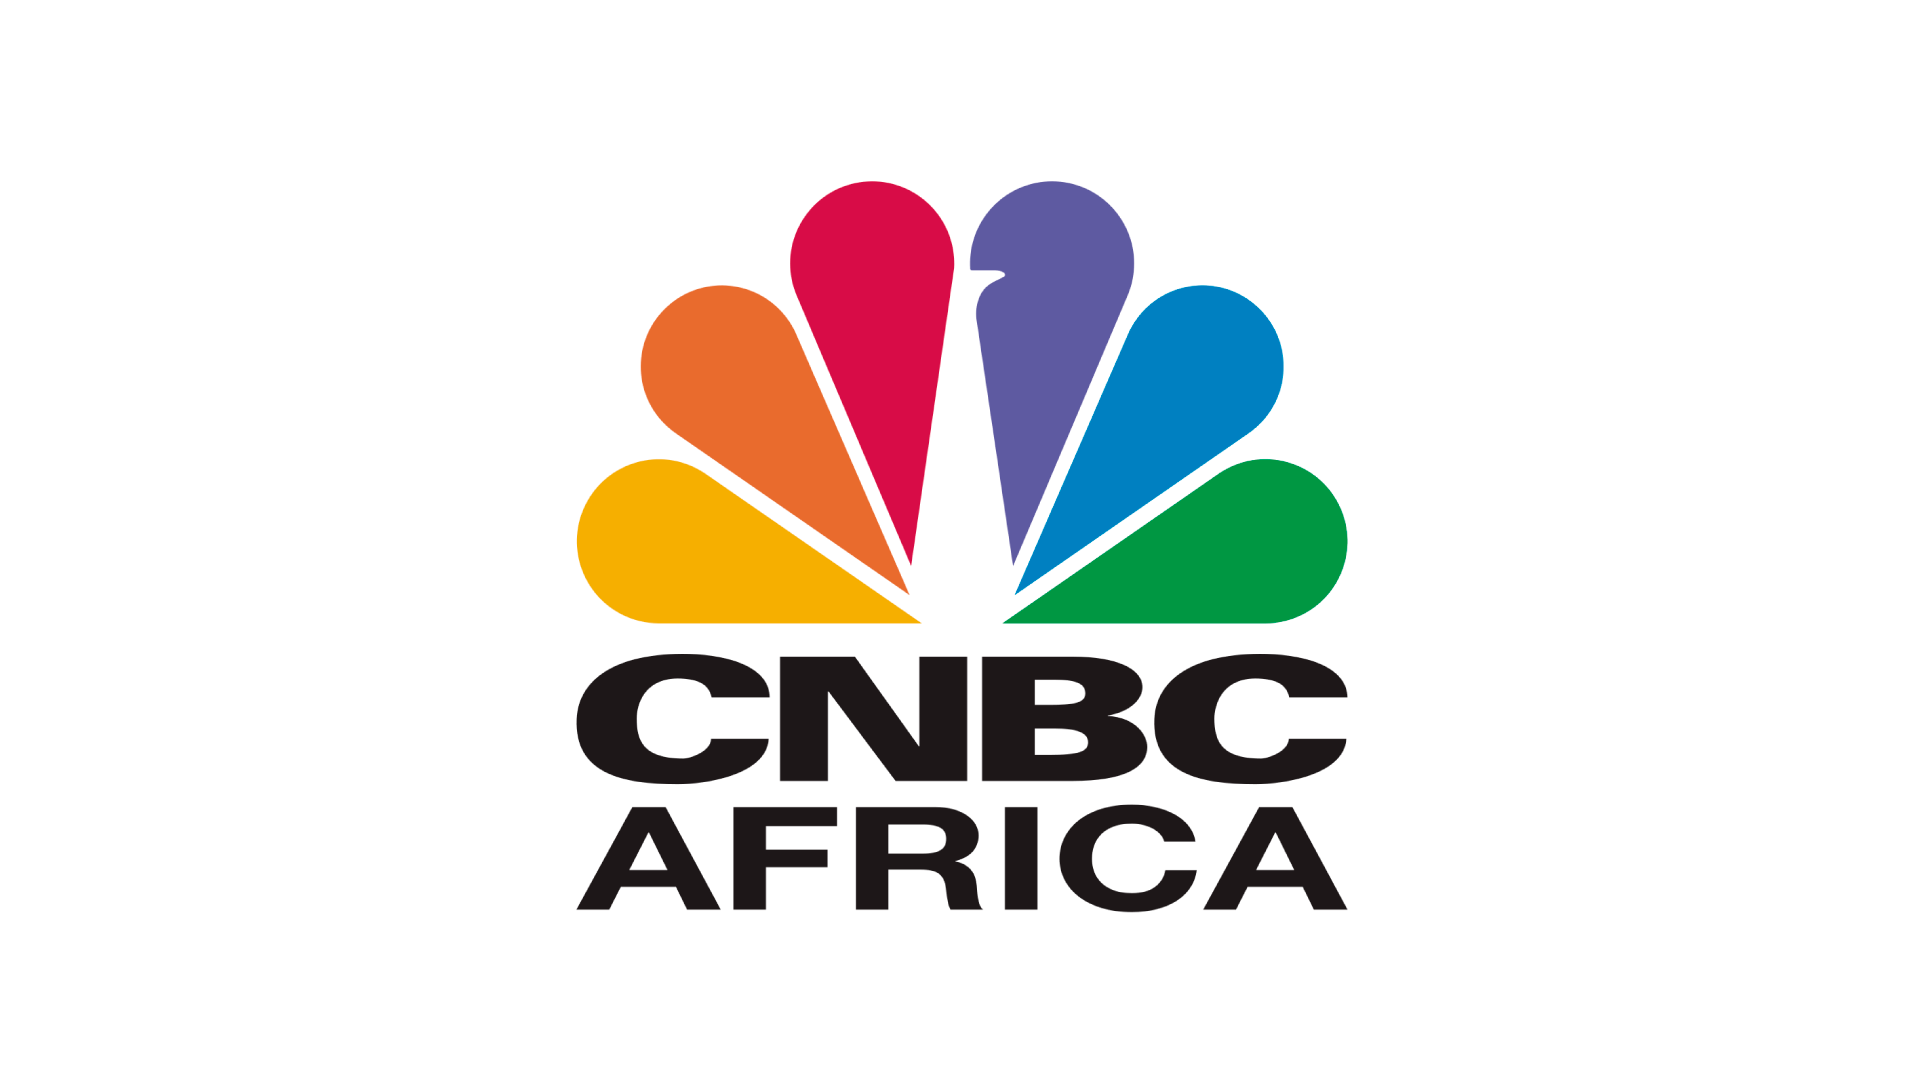 CNBC Africa Watch Live Online